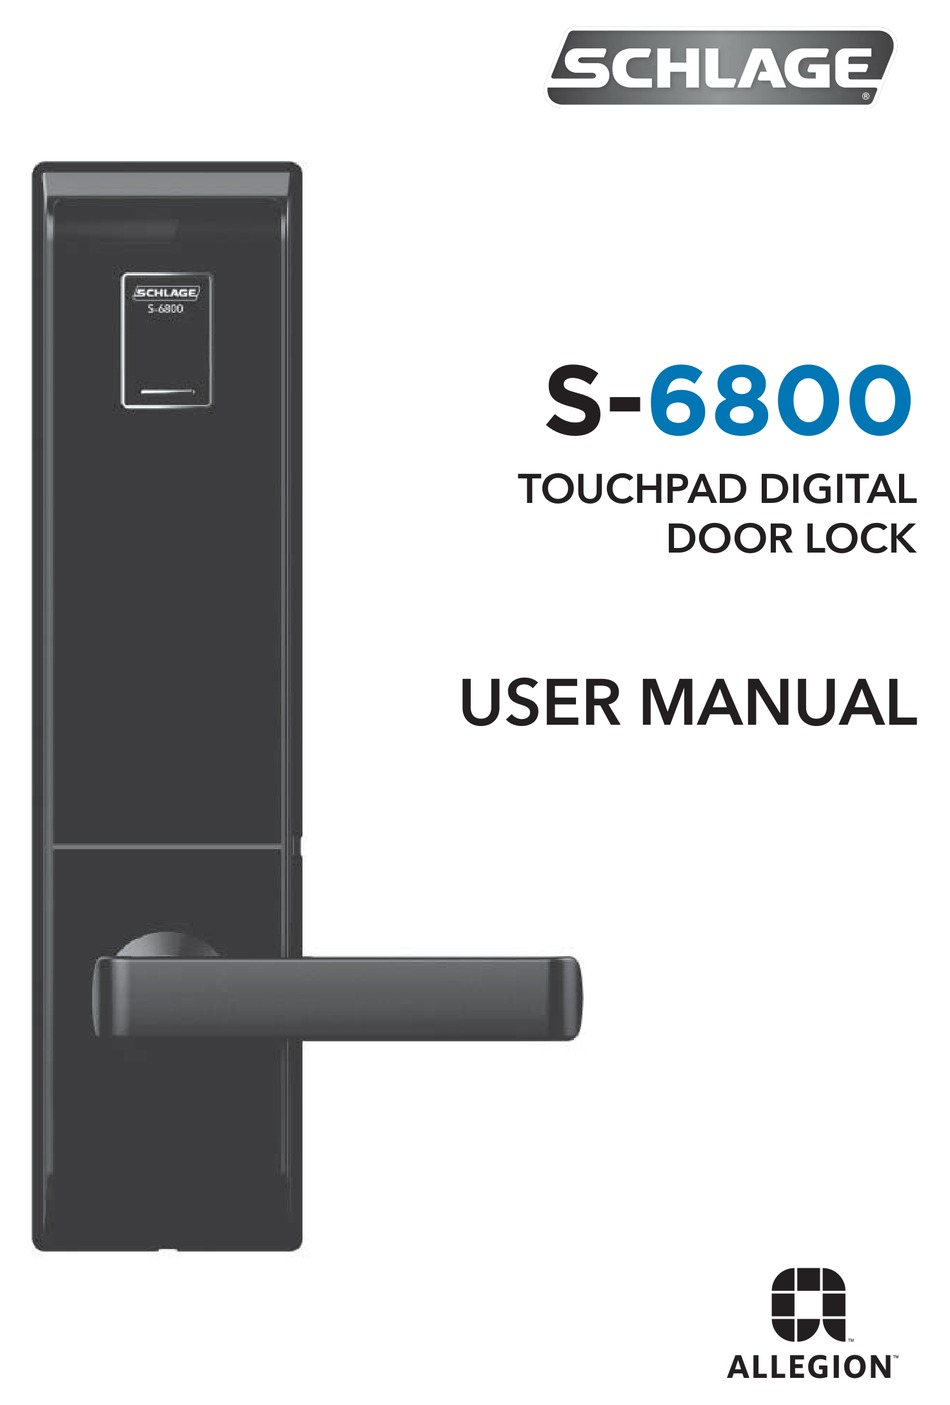 SCHLAGE S-6800 USER MANUAL Pdf Download | ManualsLib